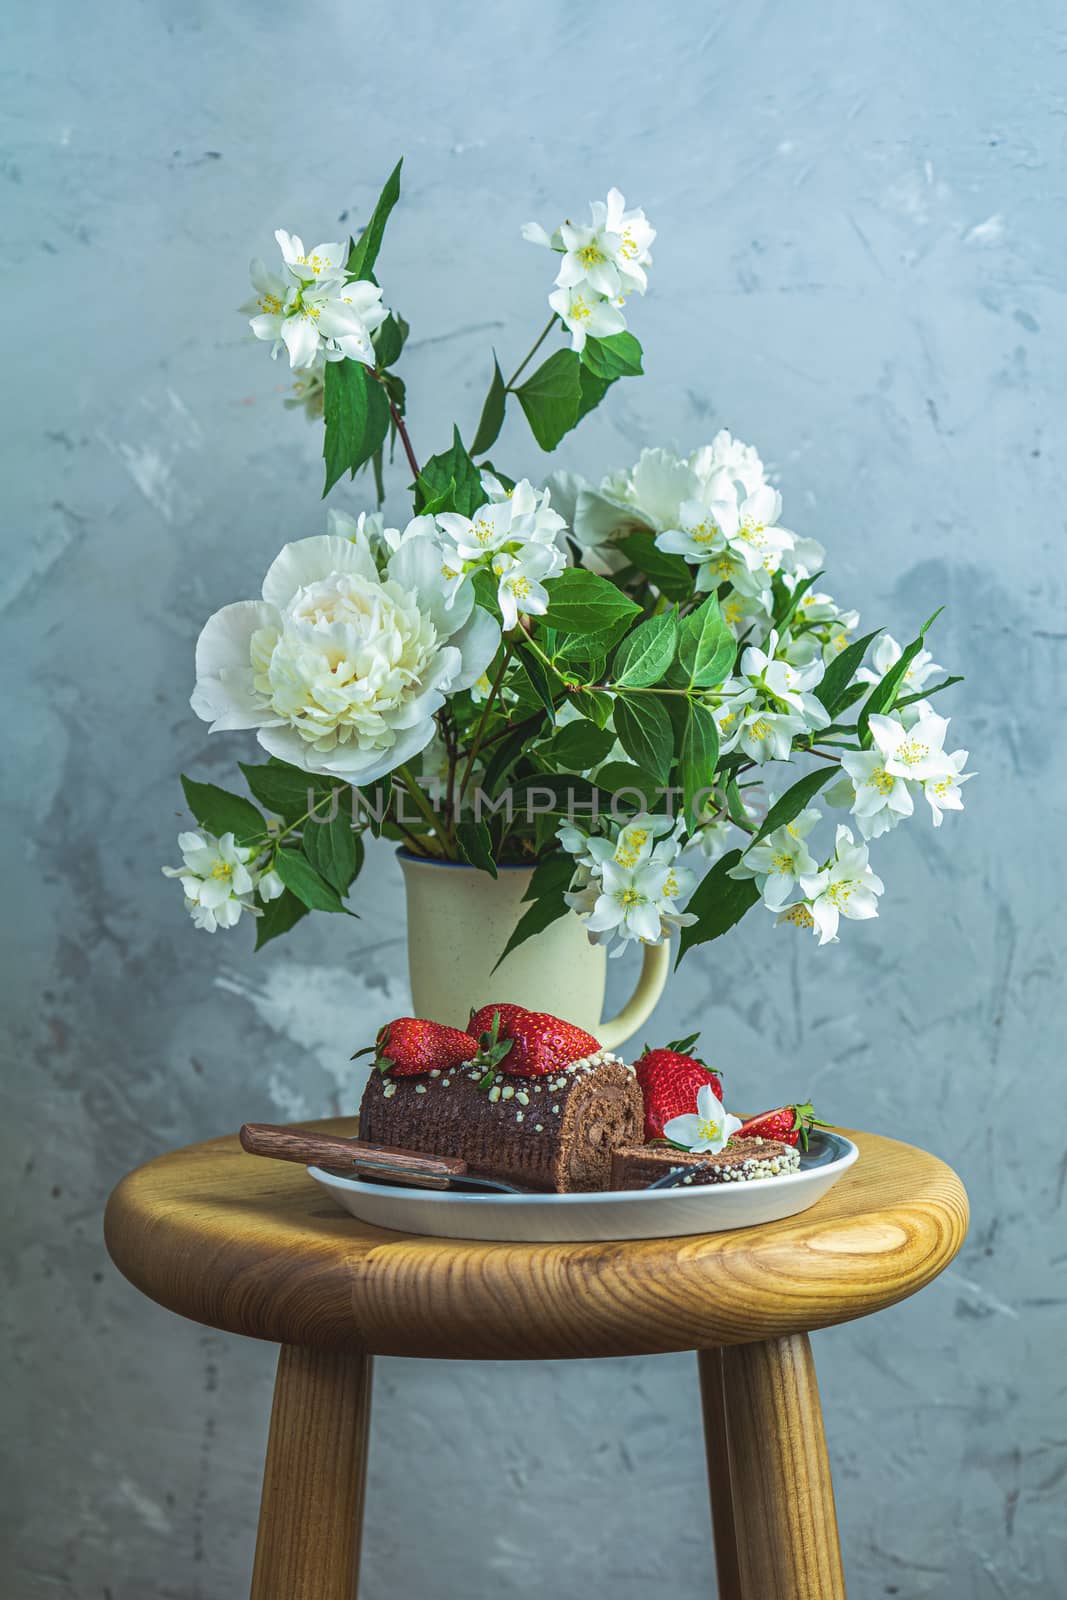 Chocolate roll cake with fresh strawberries by ArtSvitlyna